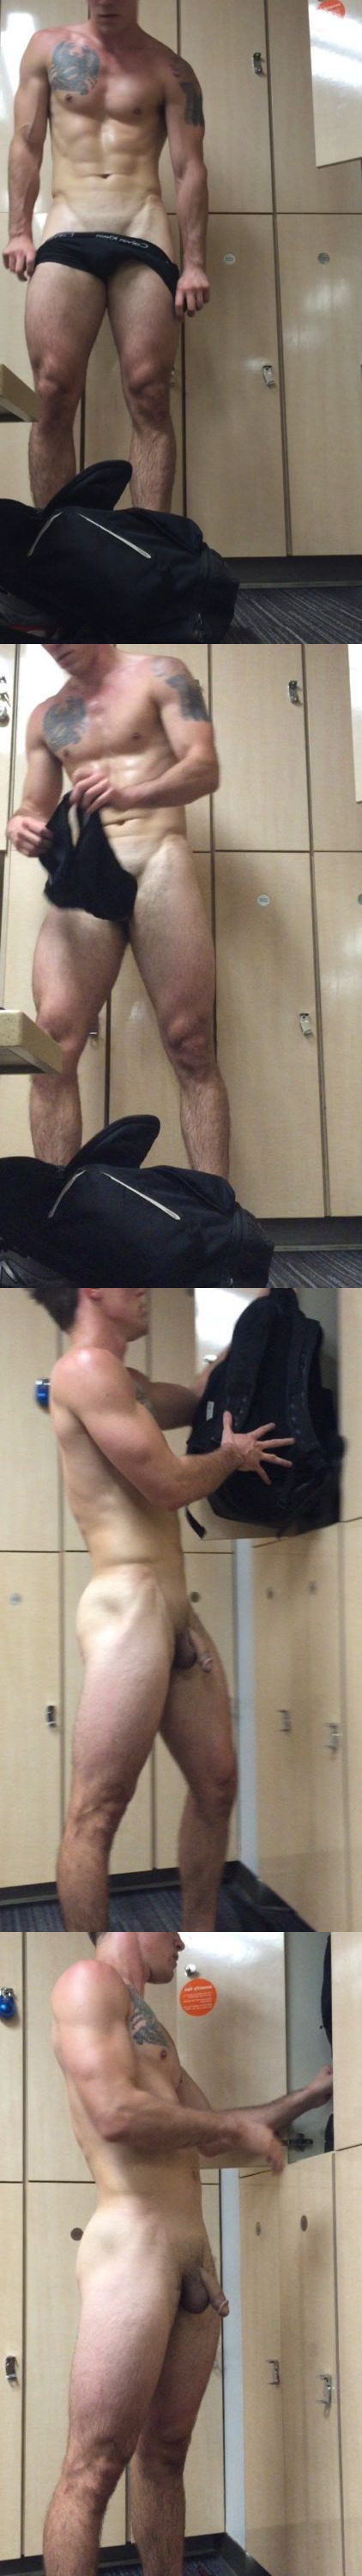 sexy stud stripping naked lockerroom spycam